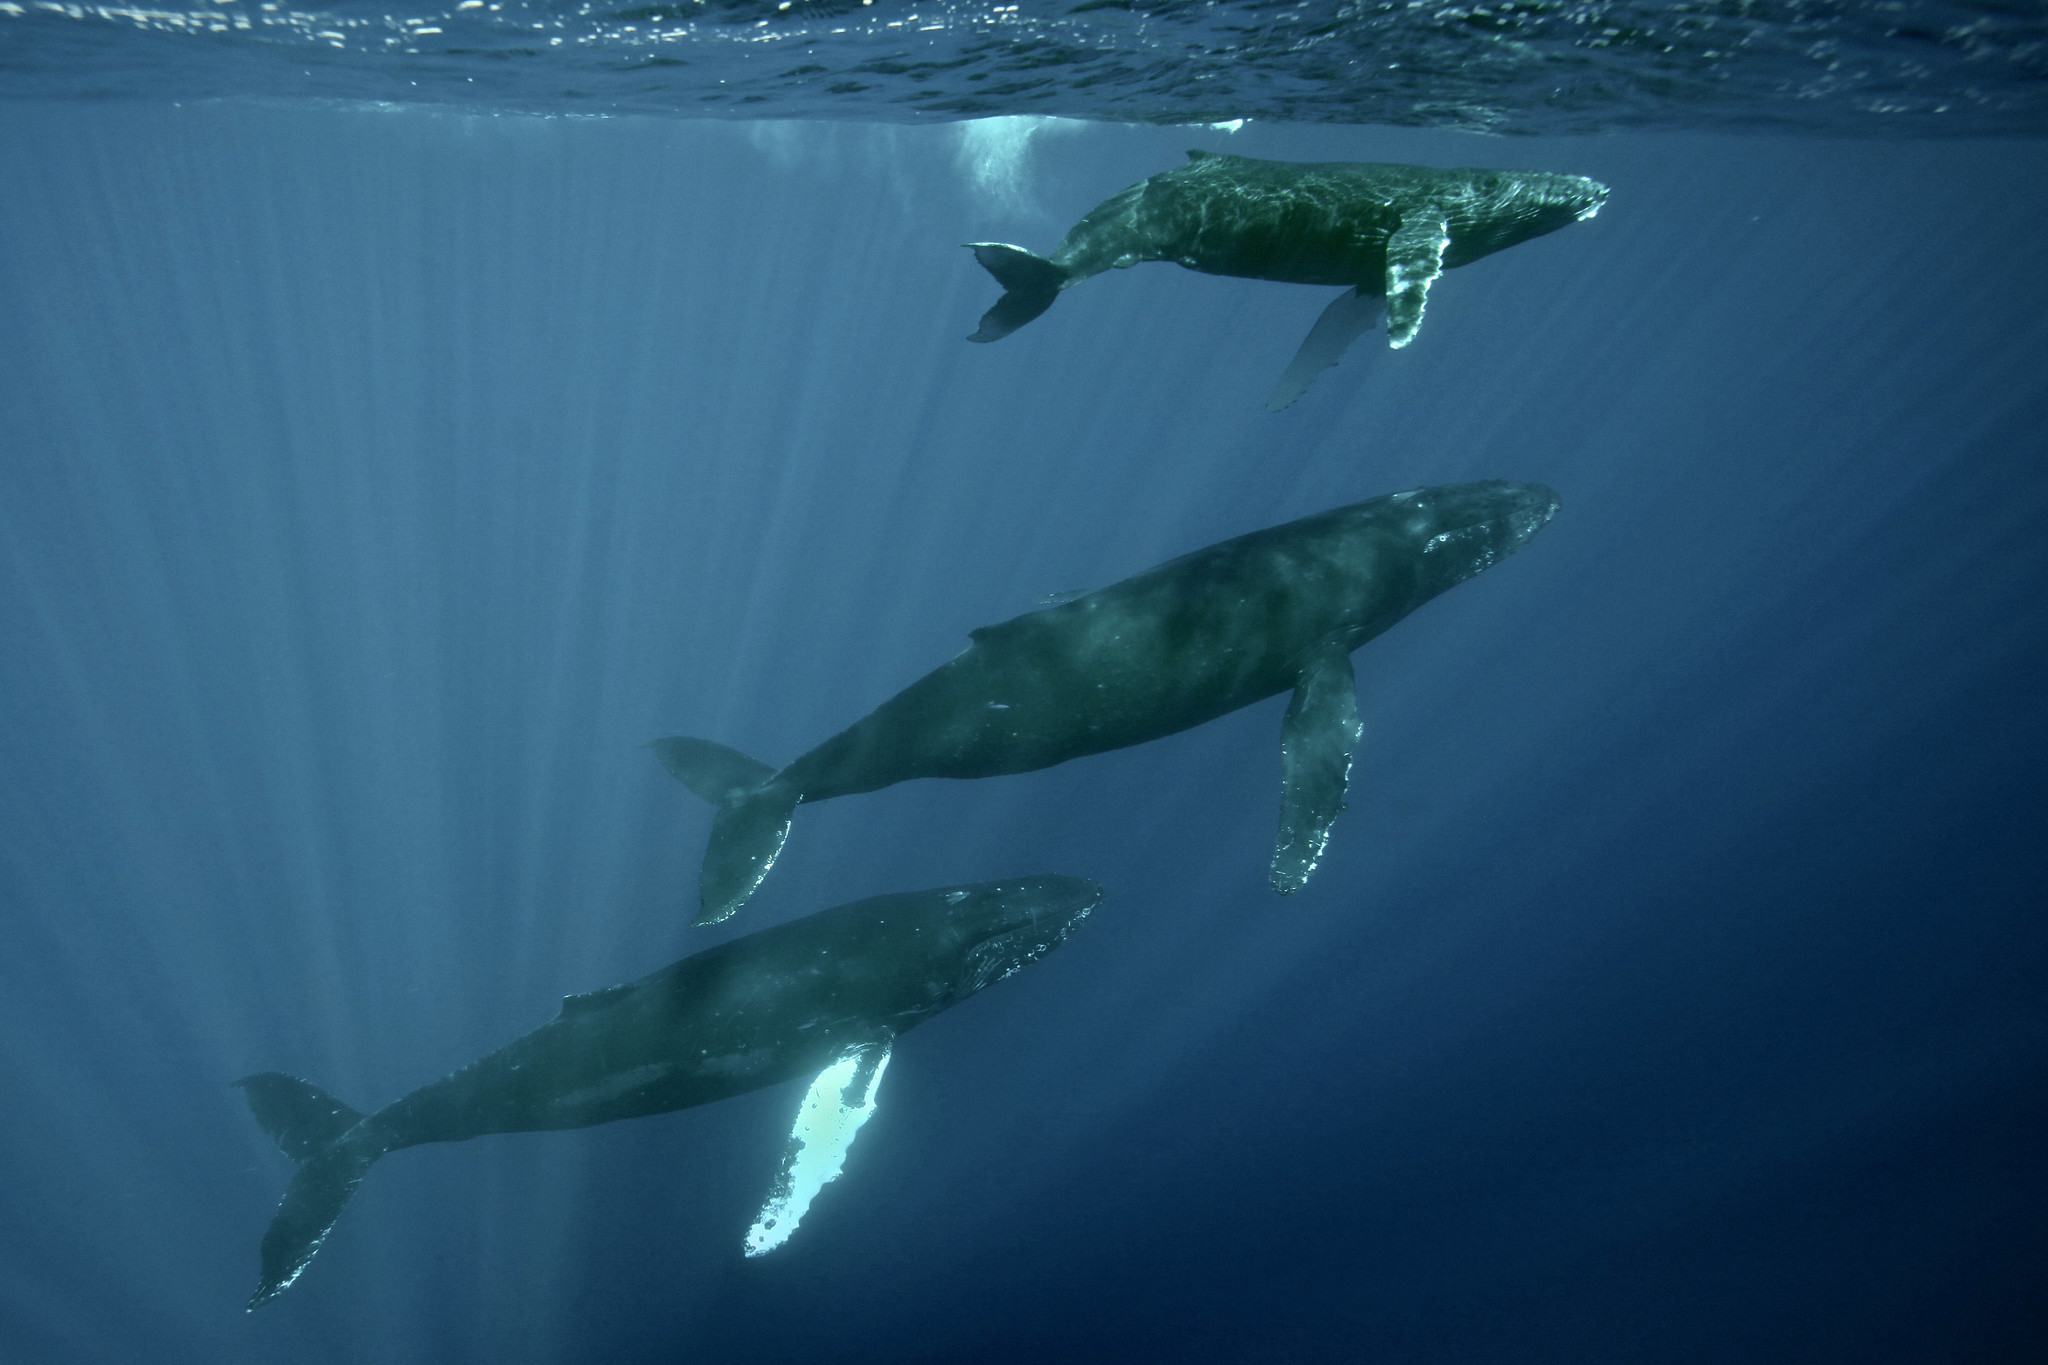 Three humpback whales